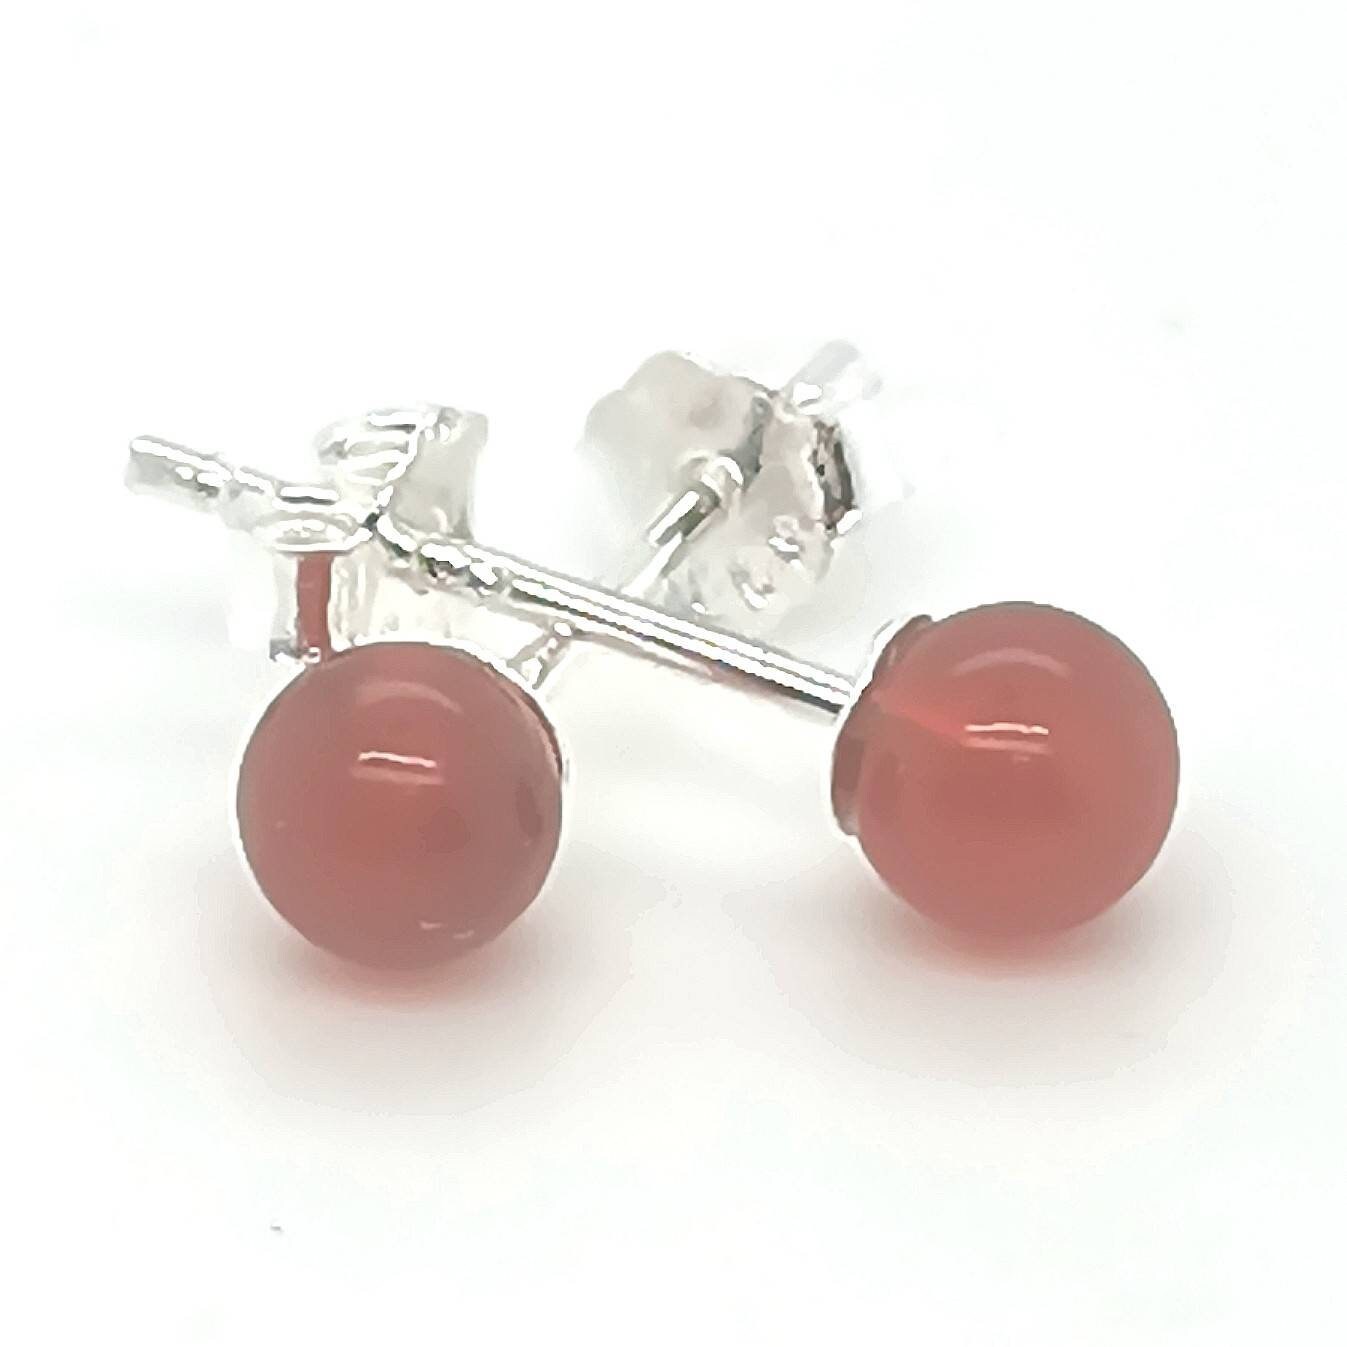 Silver Studs Earrings 2.5mm Tiny Stud Earrings Teeny Tiny Ball